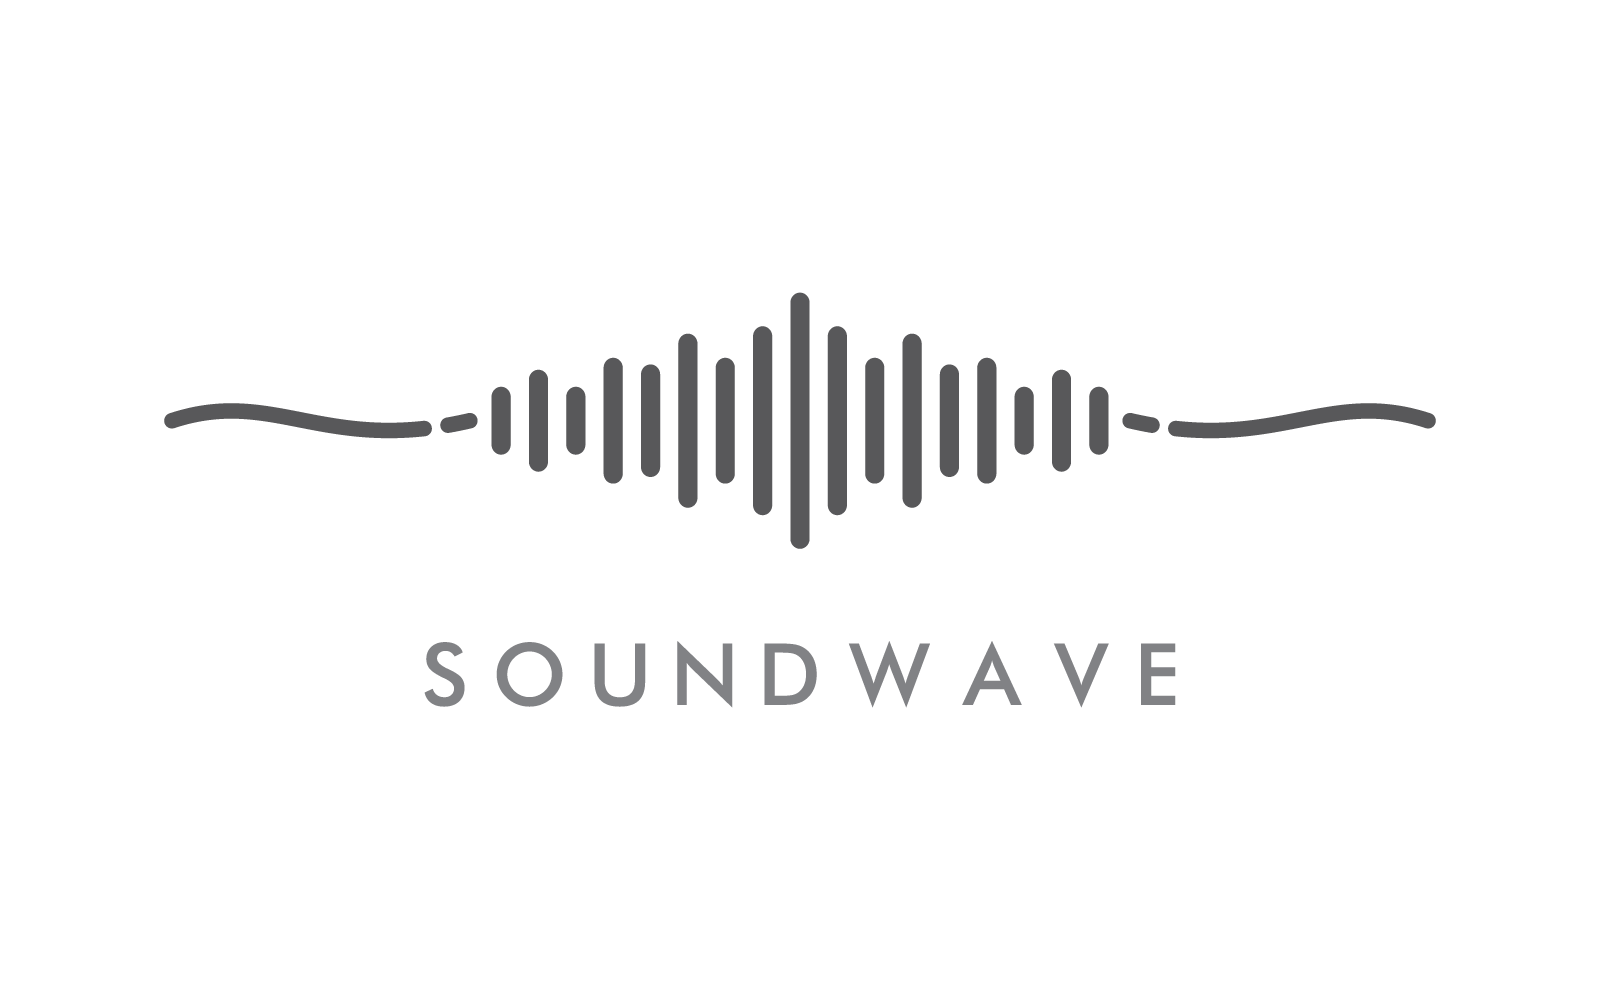 Звукова хвиля музика логотип вектор значок плоский дизайн